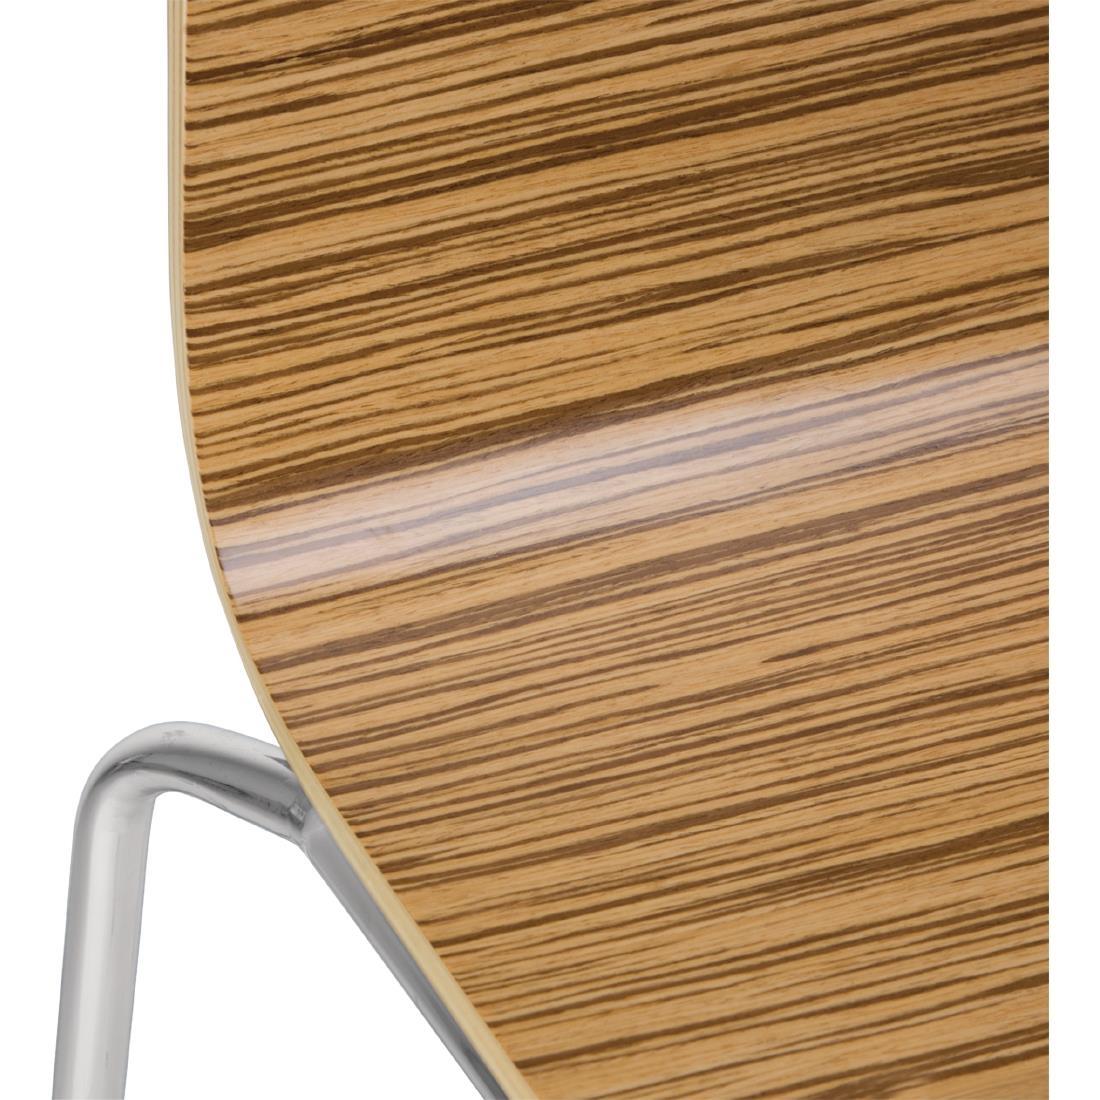 Bolero Square Back Side Chair Zebrano (Pack of 4) - GR344  - 4